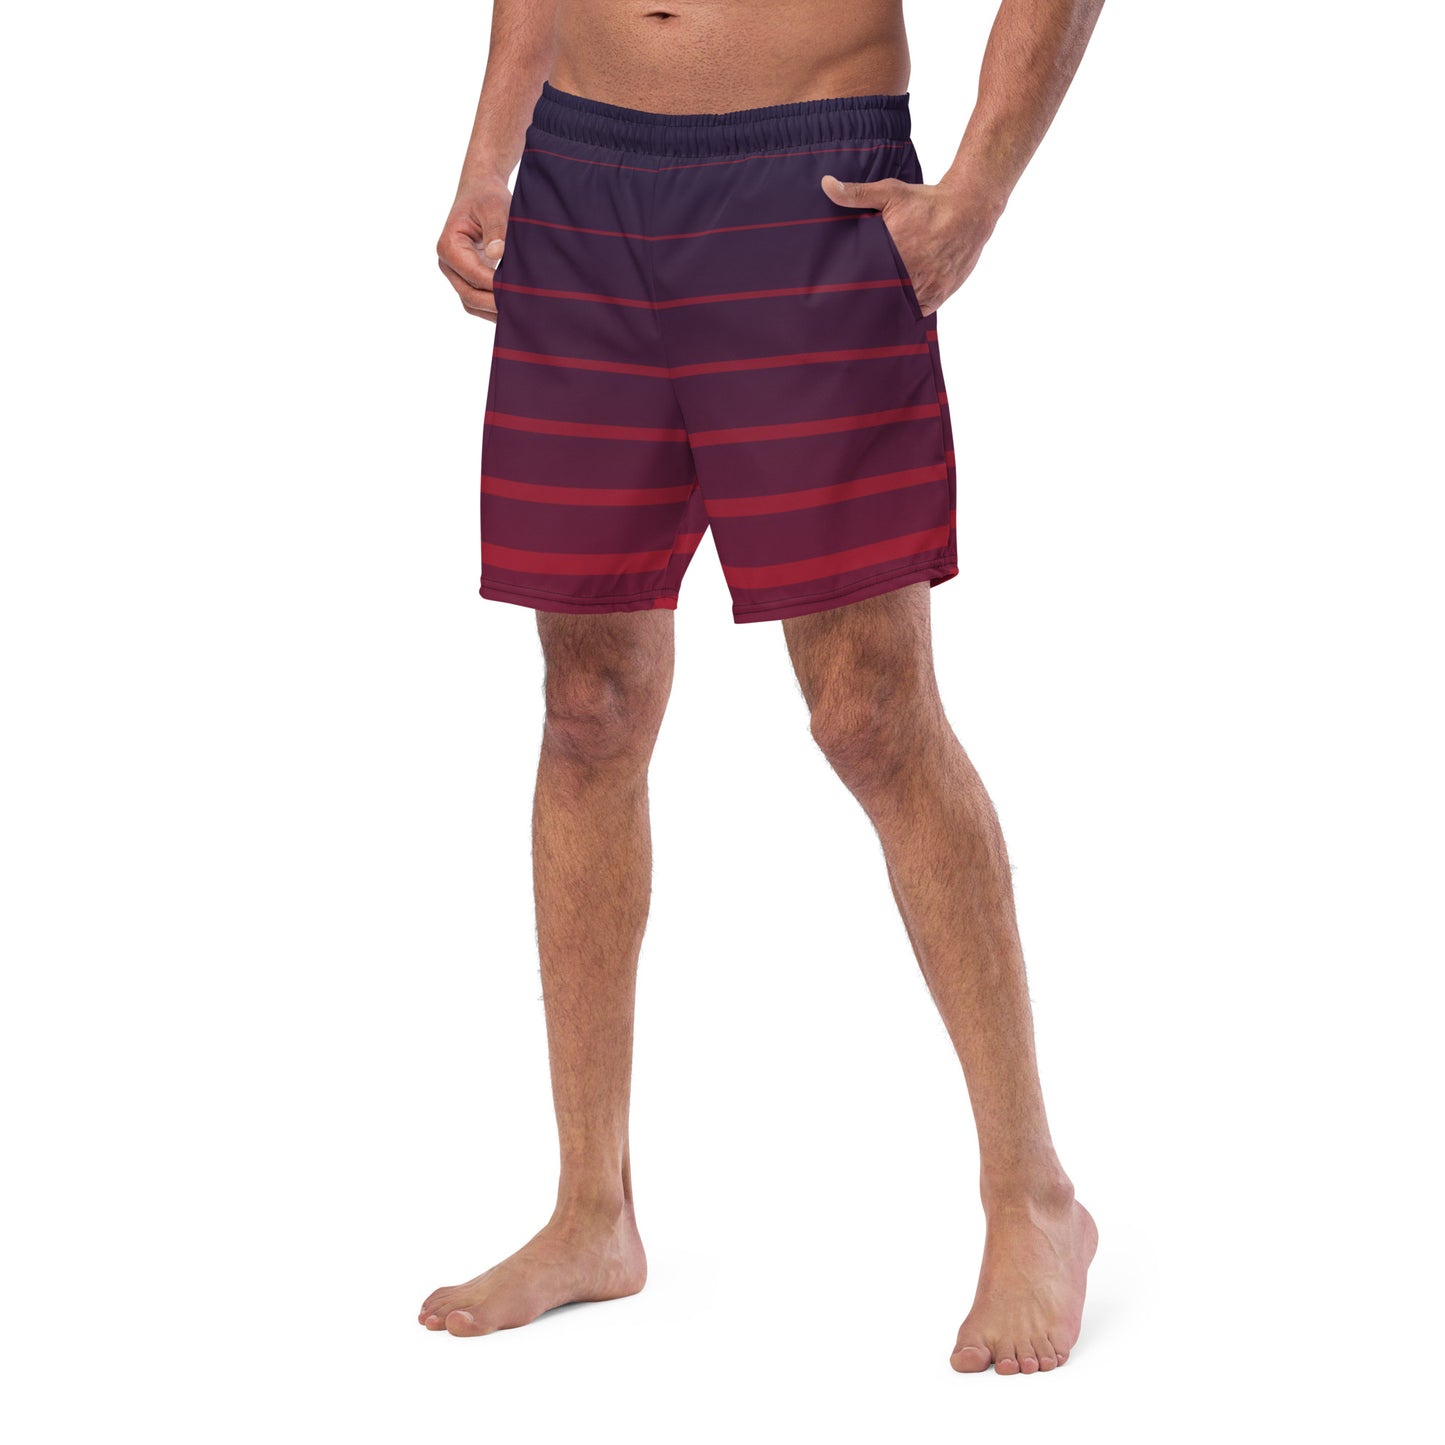 Black and Red Striped Men's swim trunks